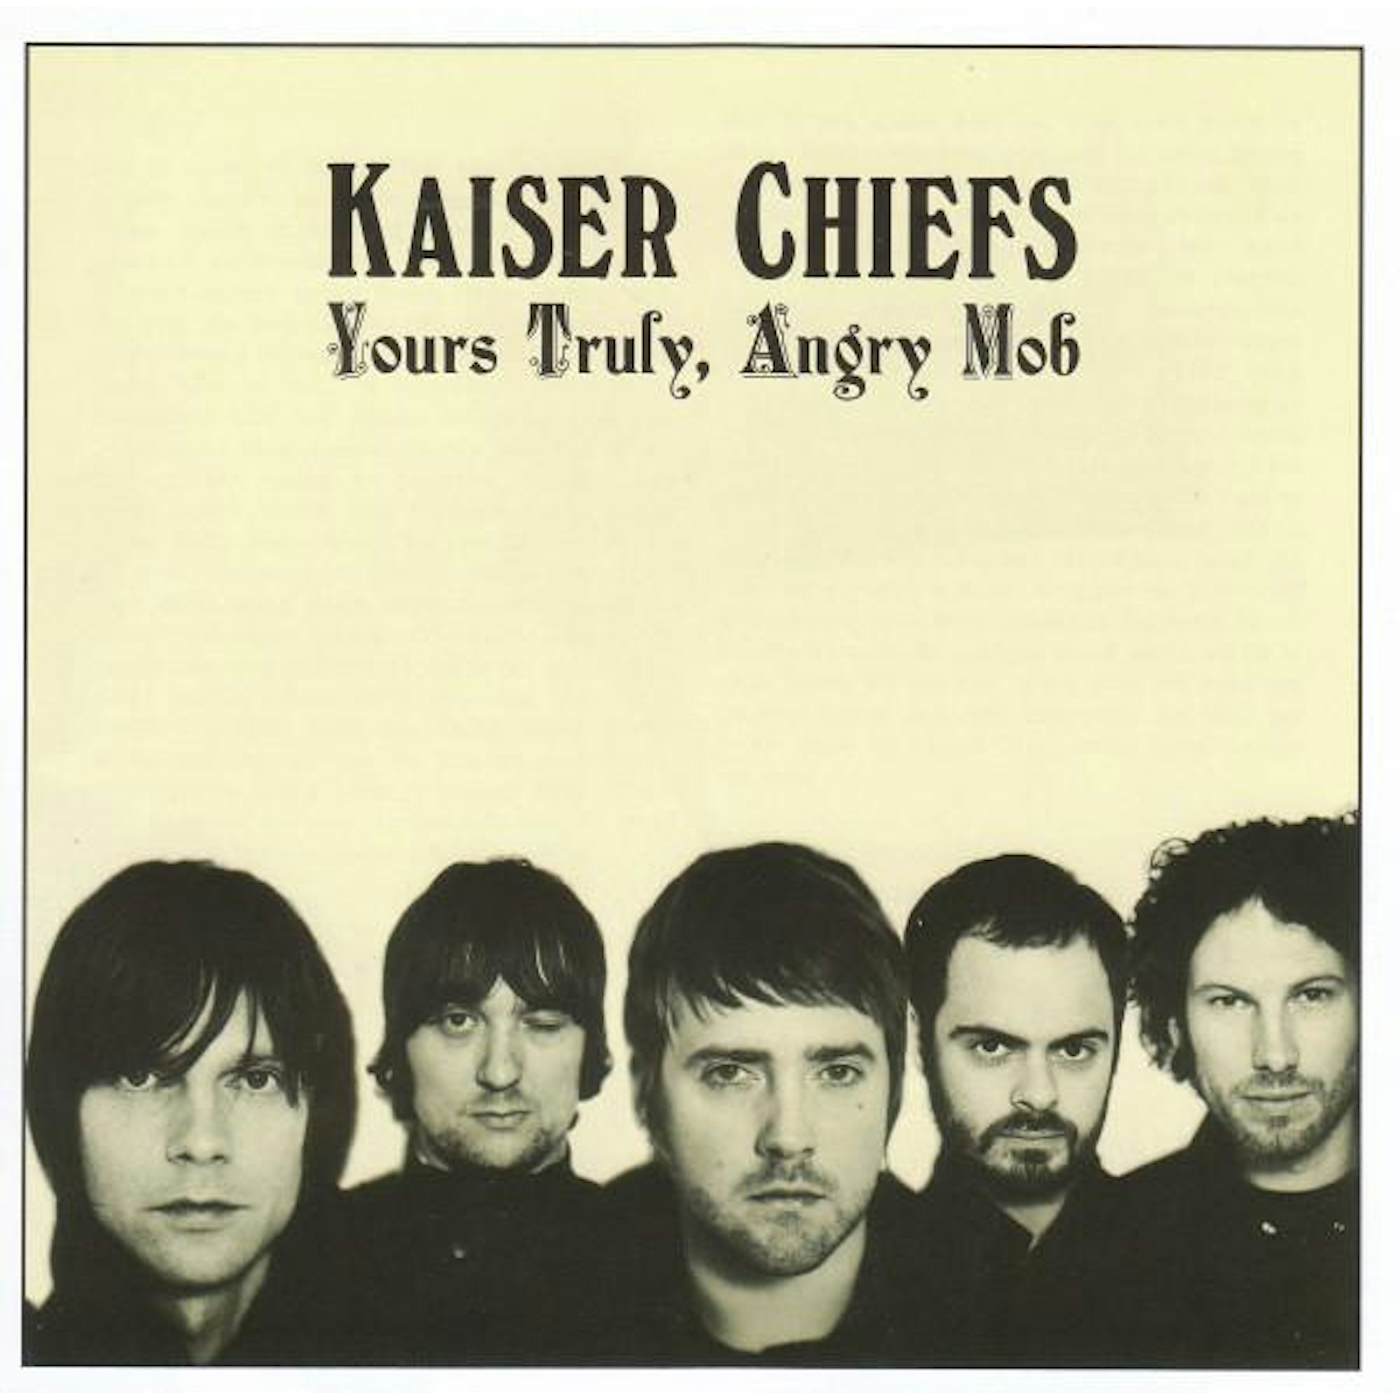 Employment Vinyl Record - Kaiser Chiefs